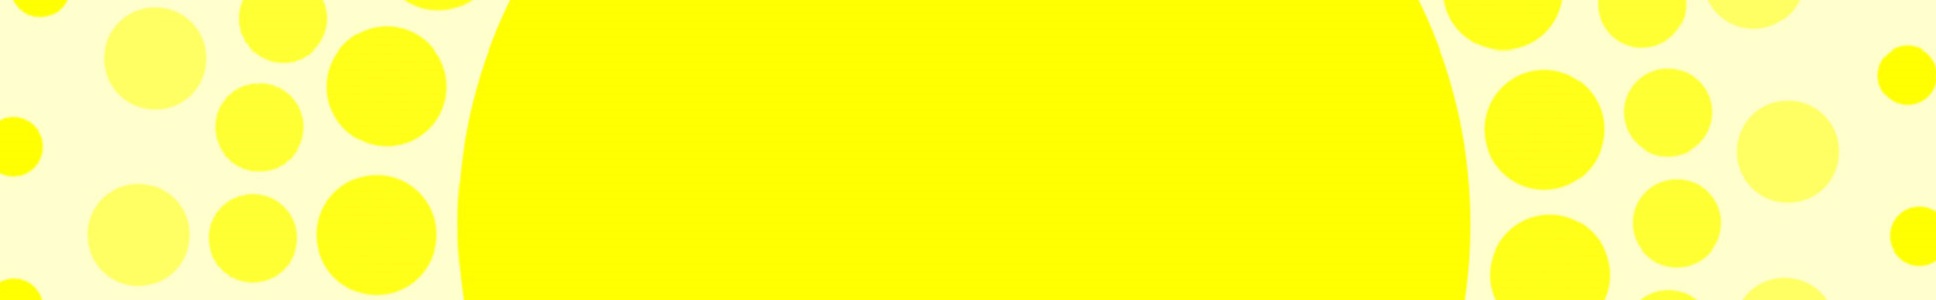 yellow-background